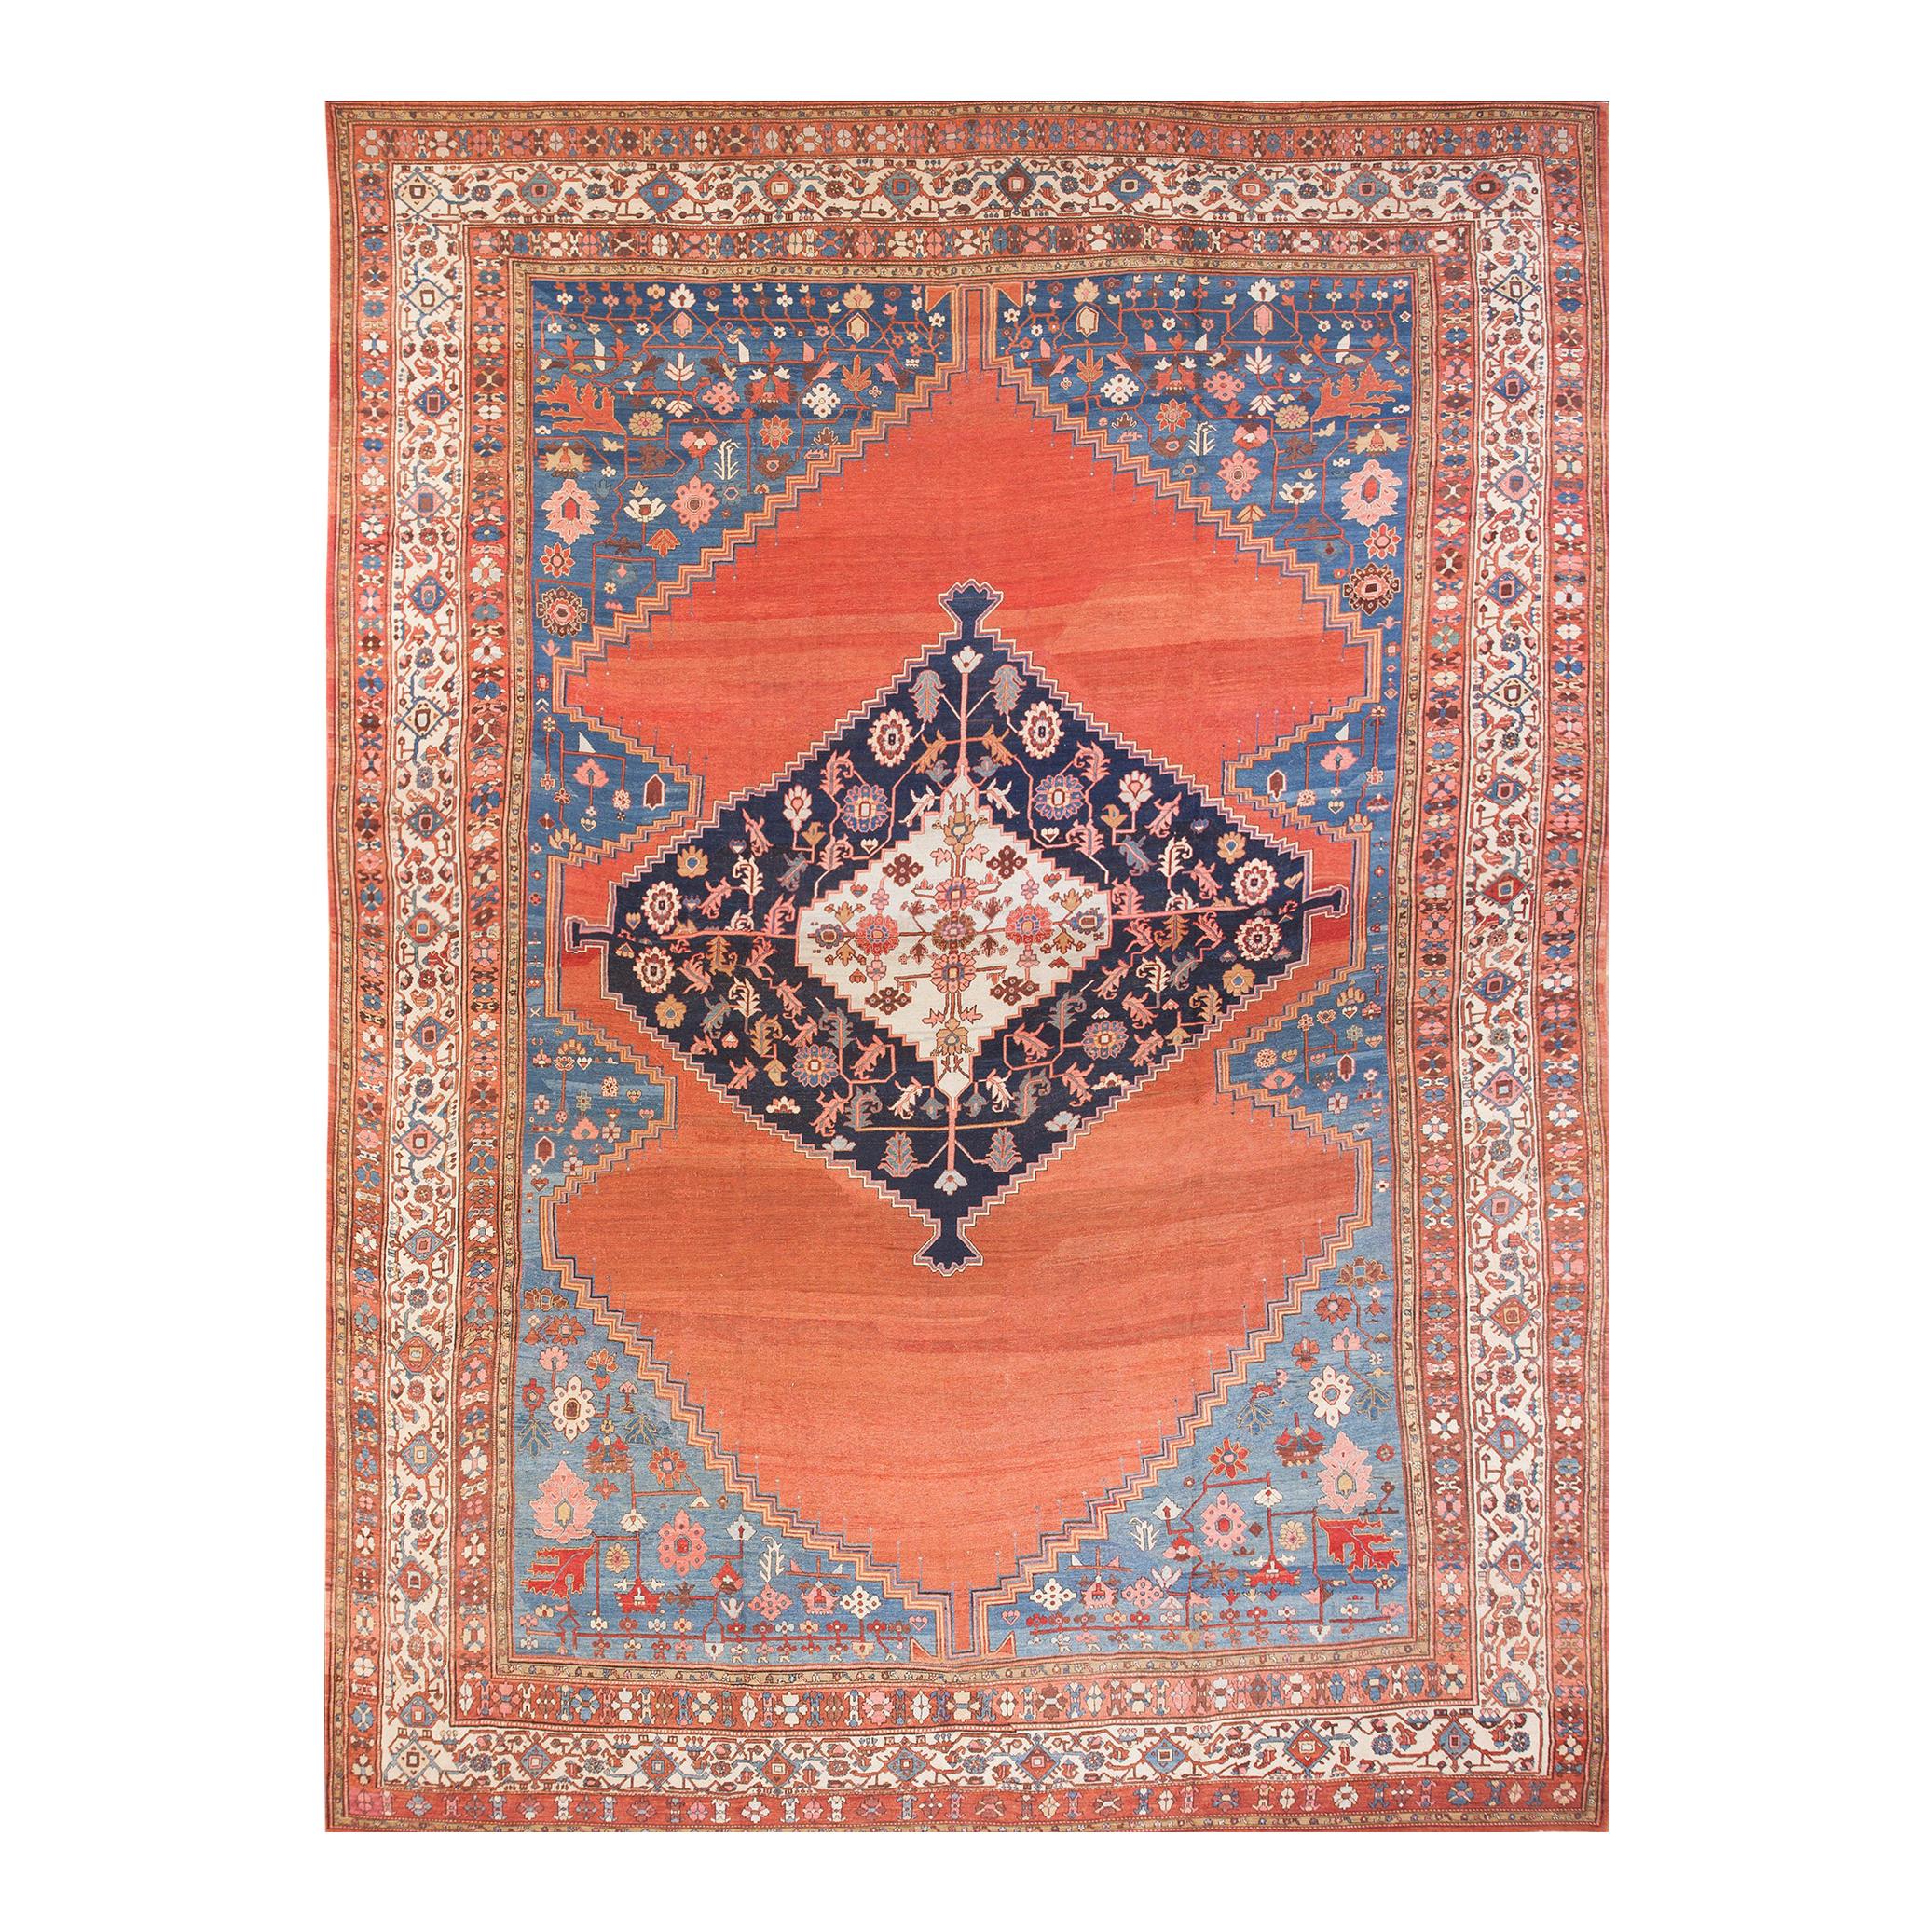 19th Century N.W. Persian  Bakshaiesh Carpet ( 15'8" x 21' - 477 x 640 ) For Sale